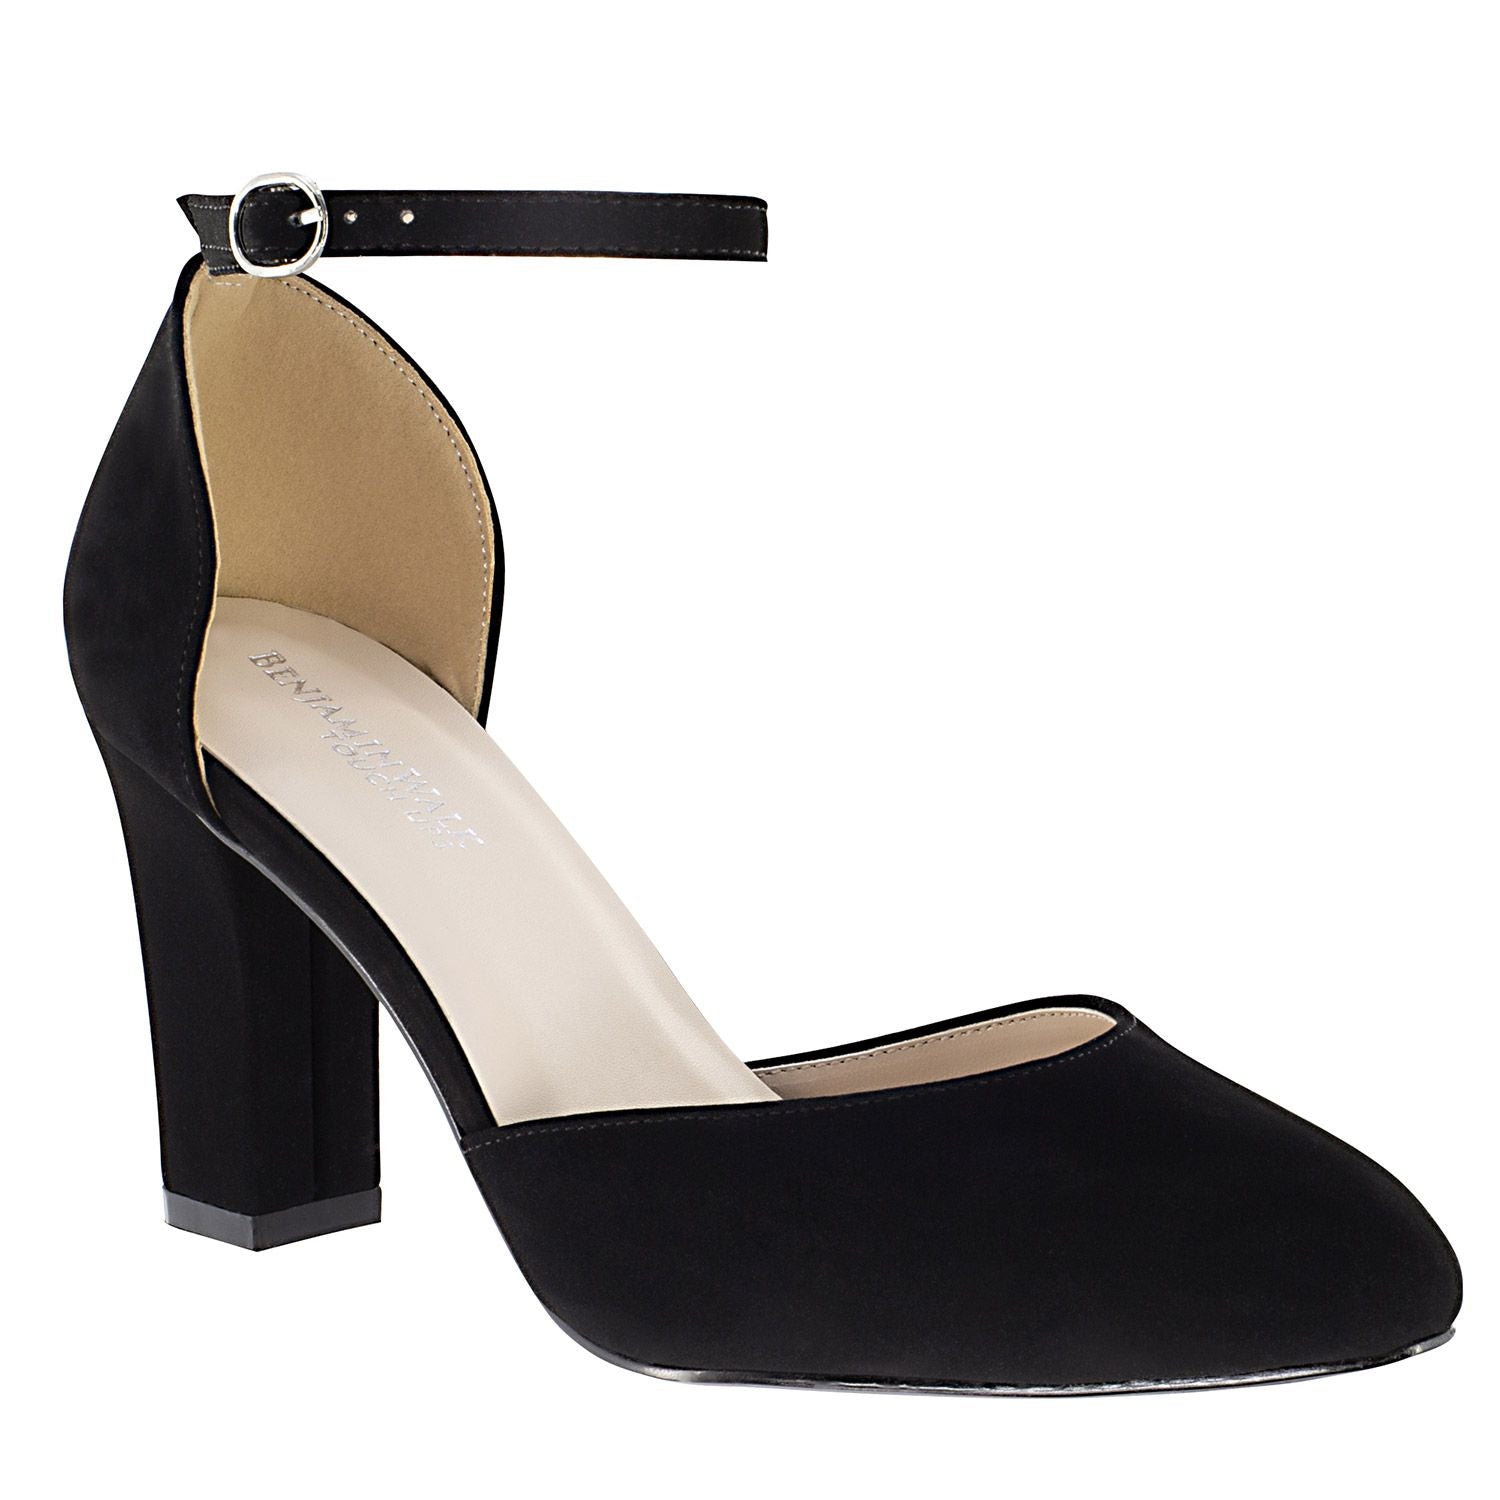  classic closed toe design that features an elegant 2.5 inch heel.